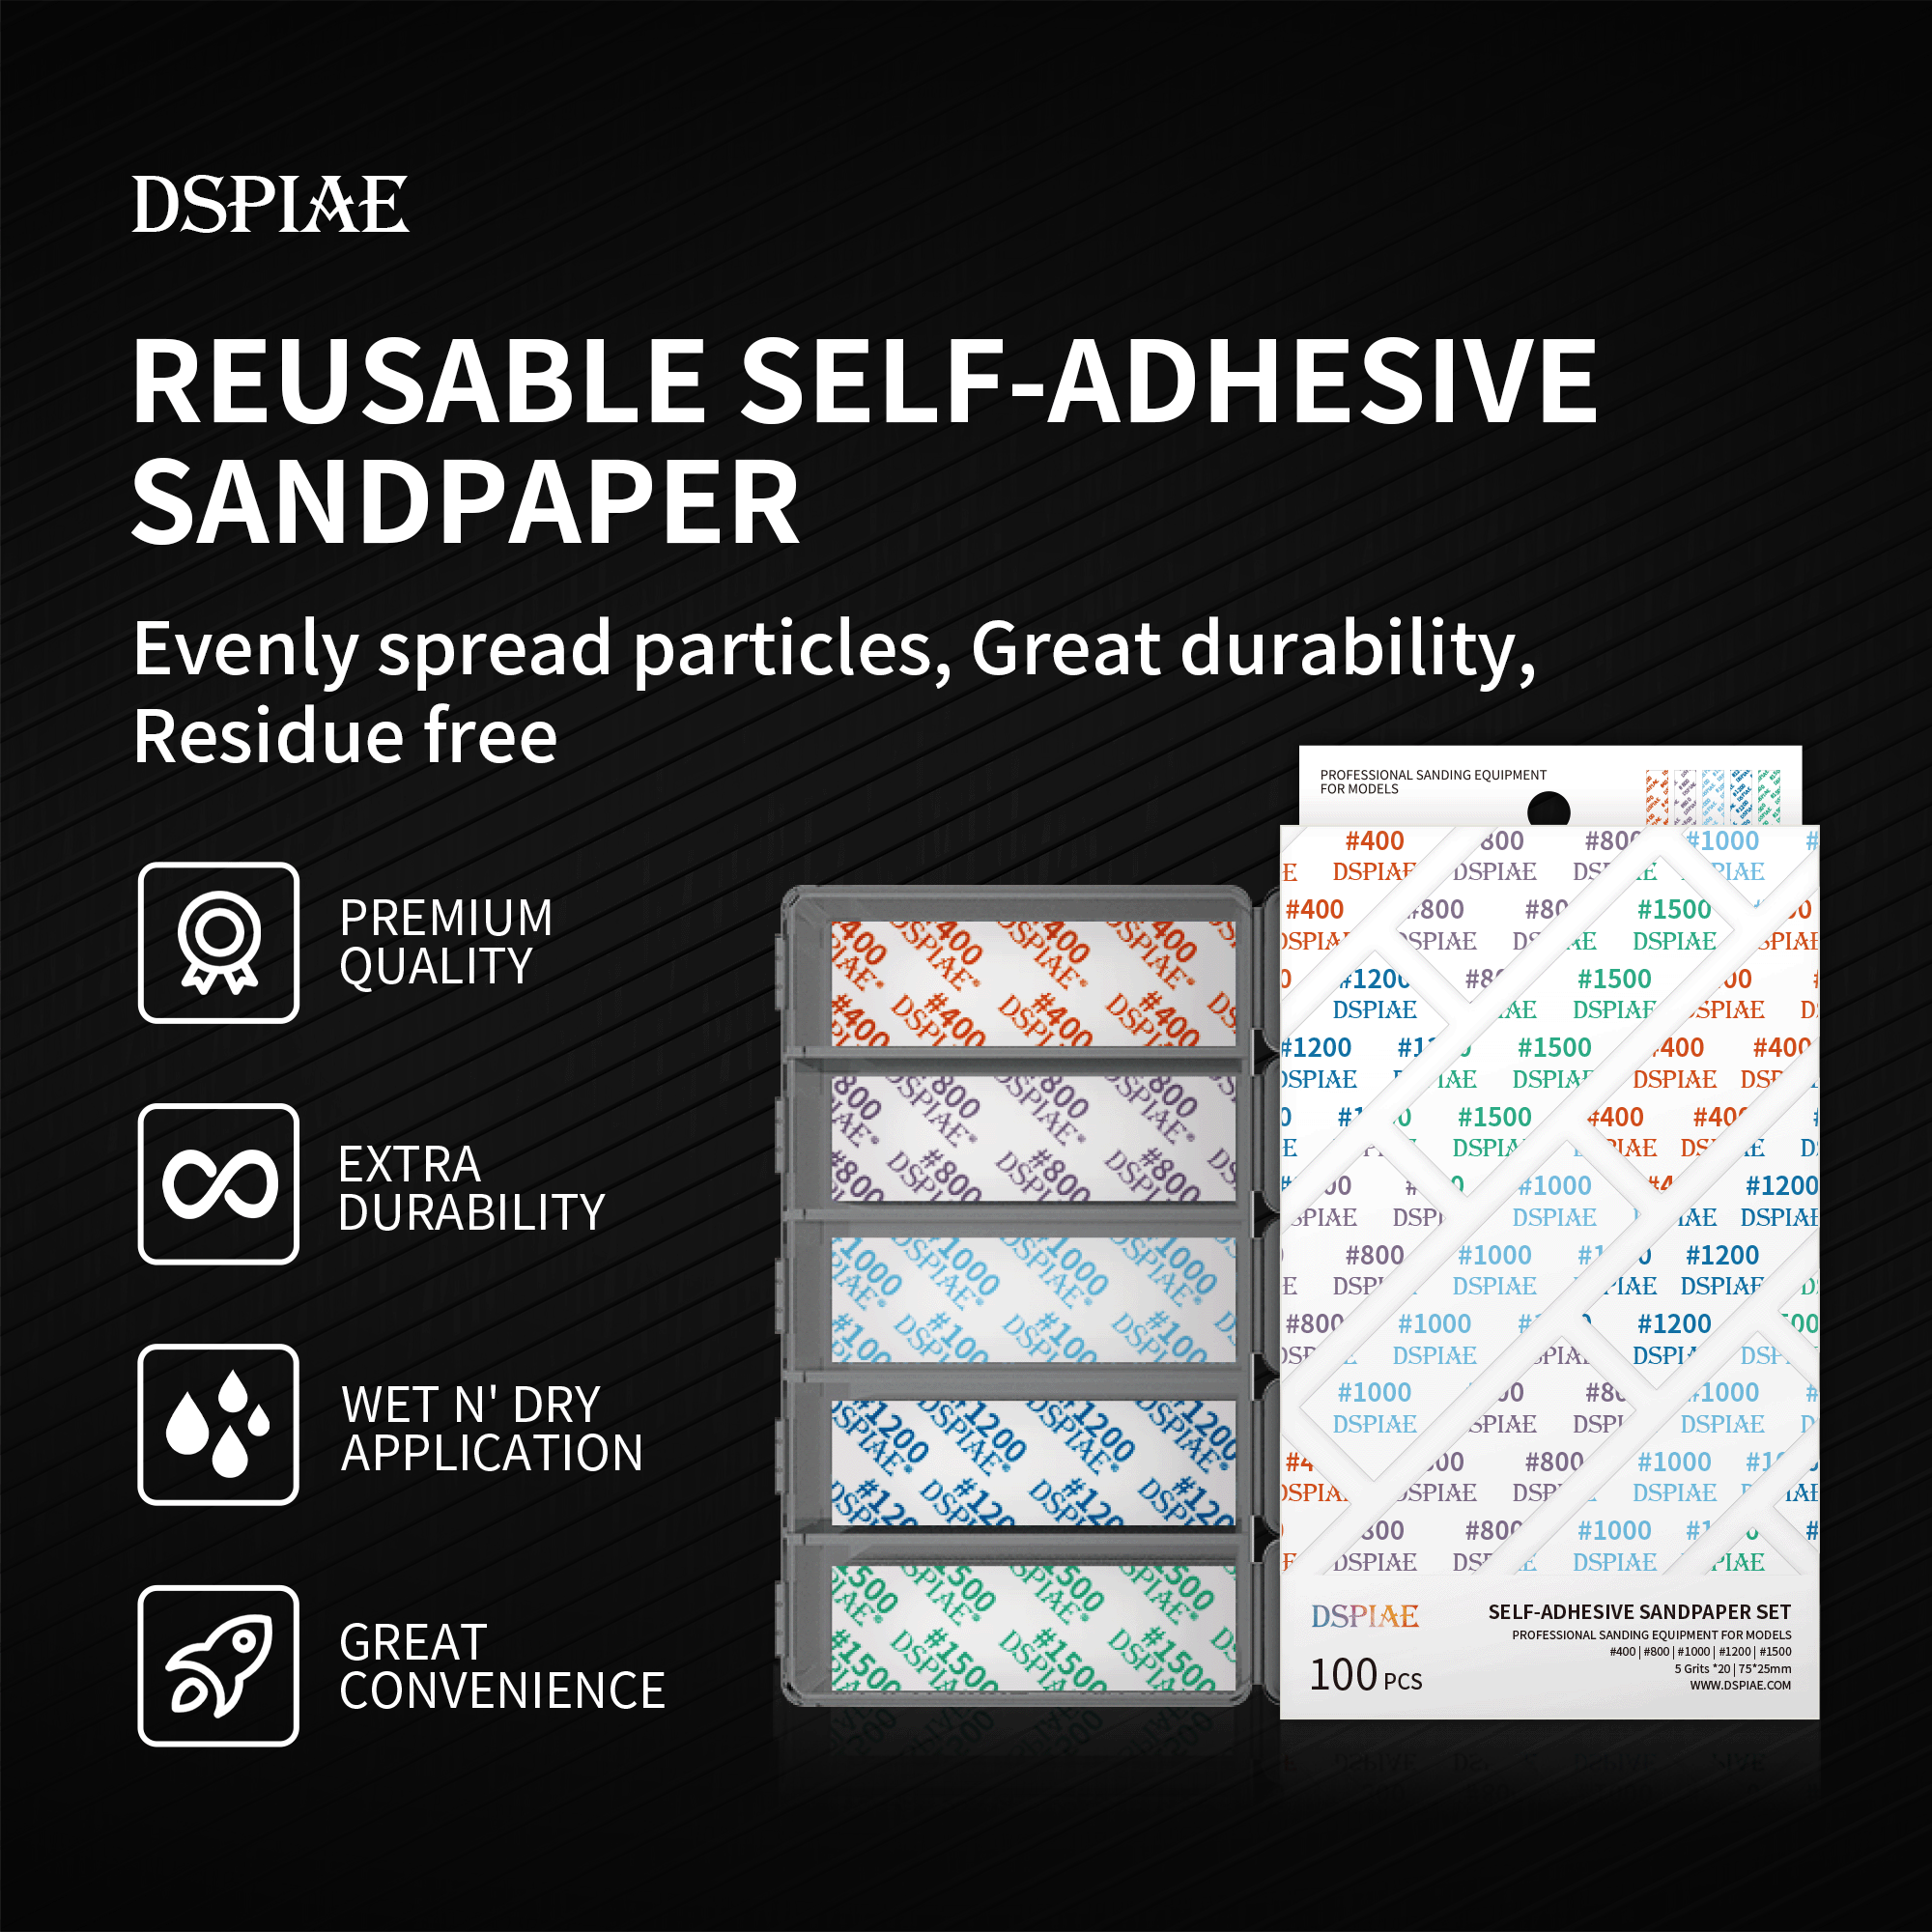 DSPIAE DSP-S01 Reusable Self-Adhesive Sandpaper Set